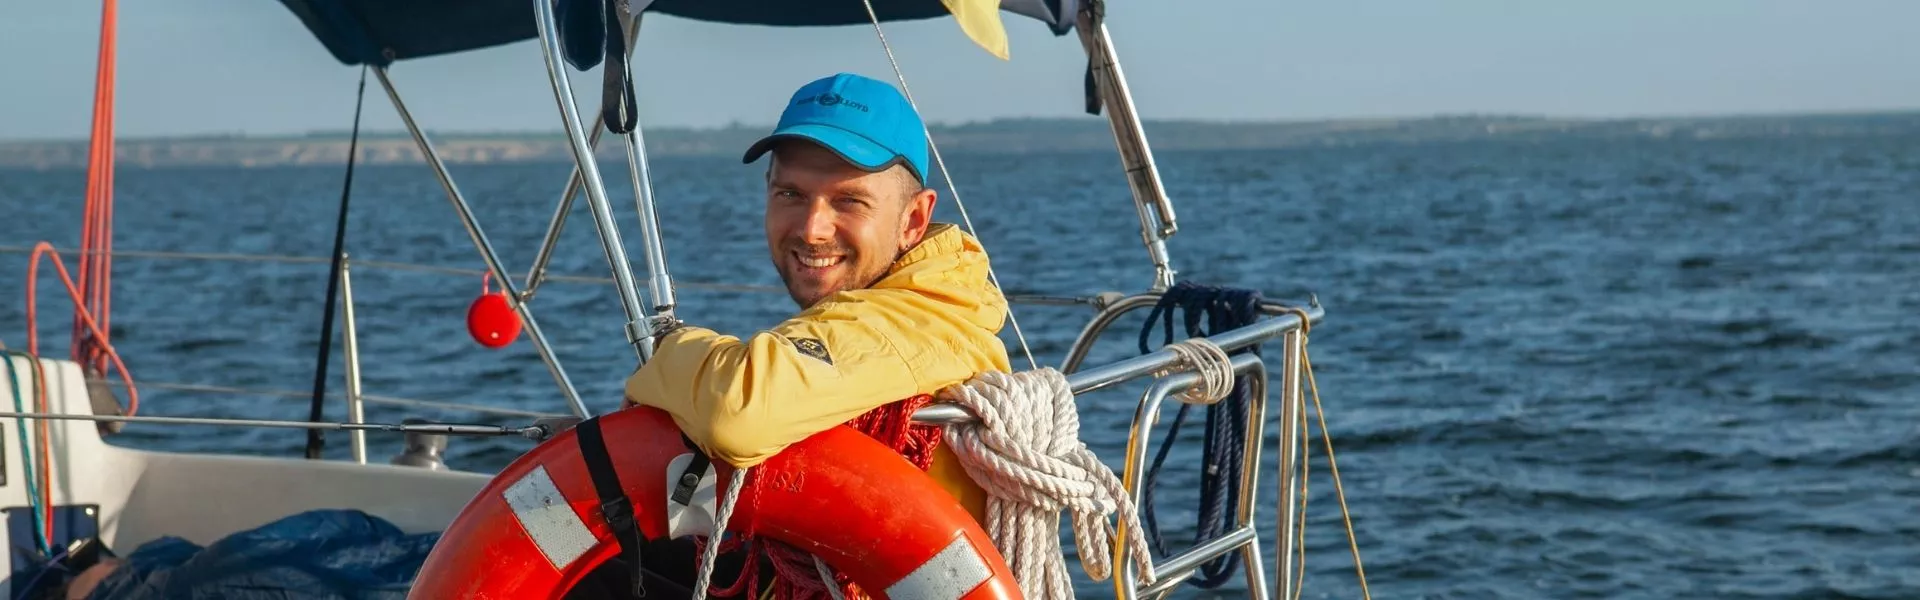 Тур на яхте по югу Украины